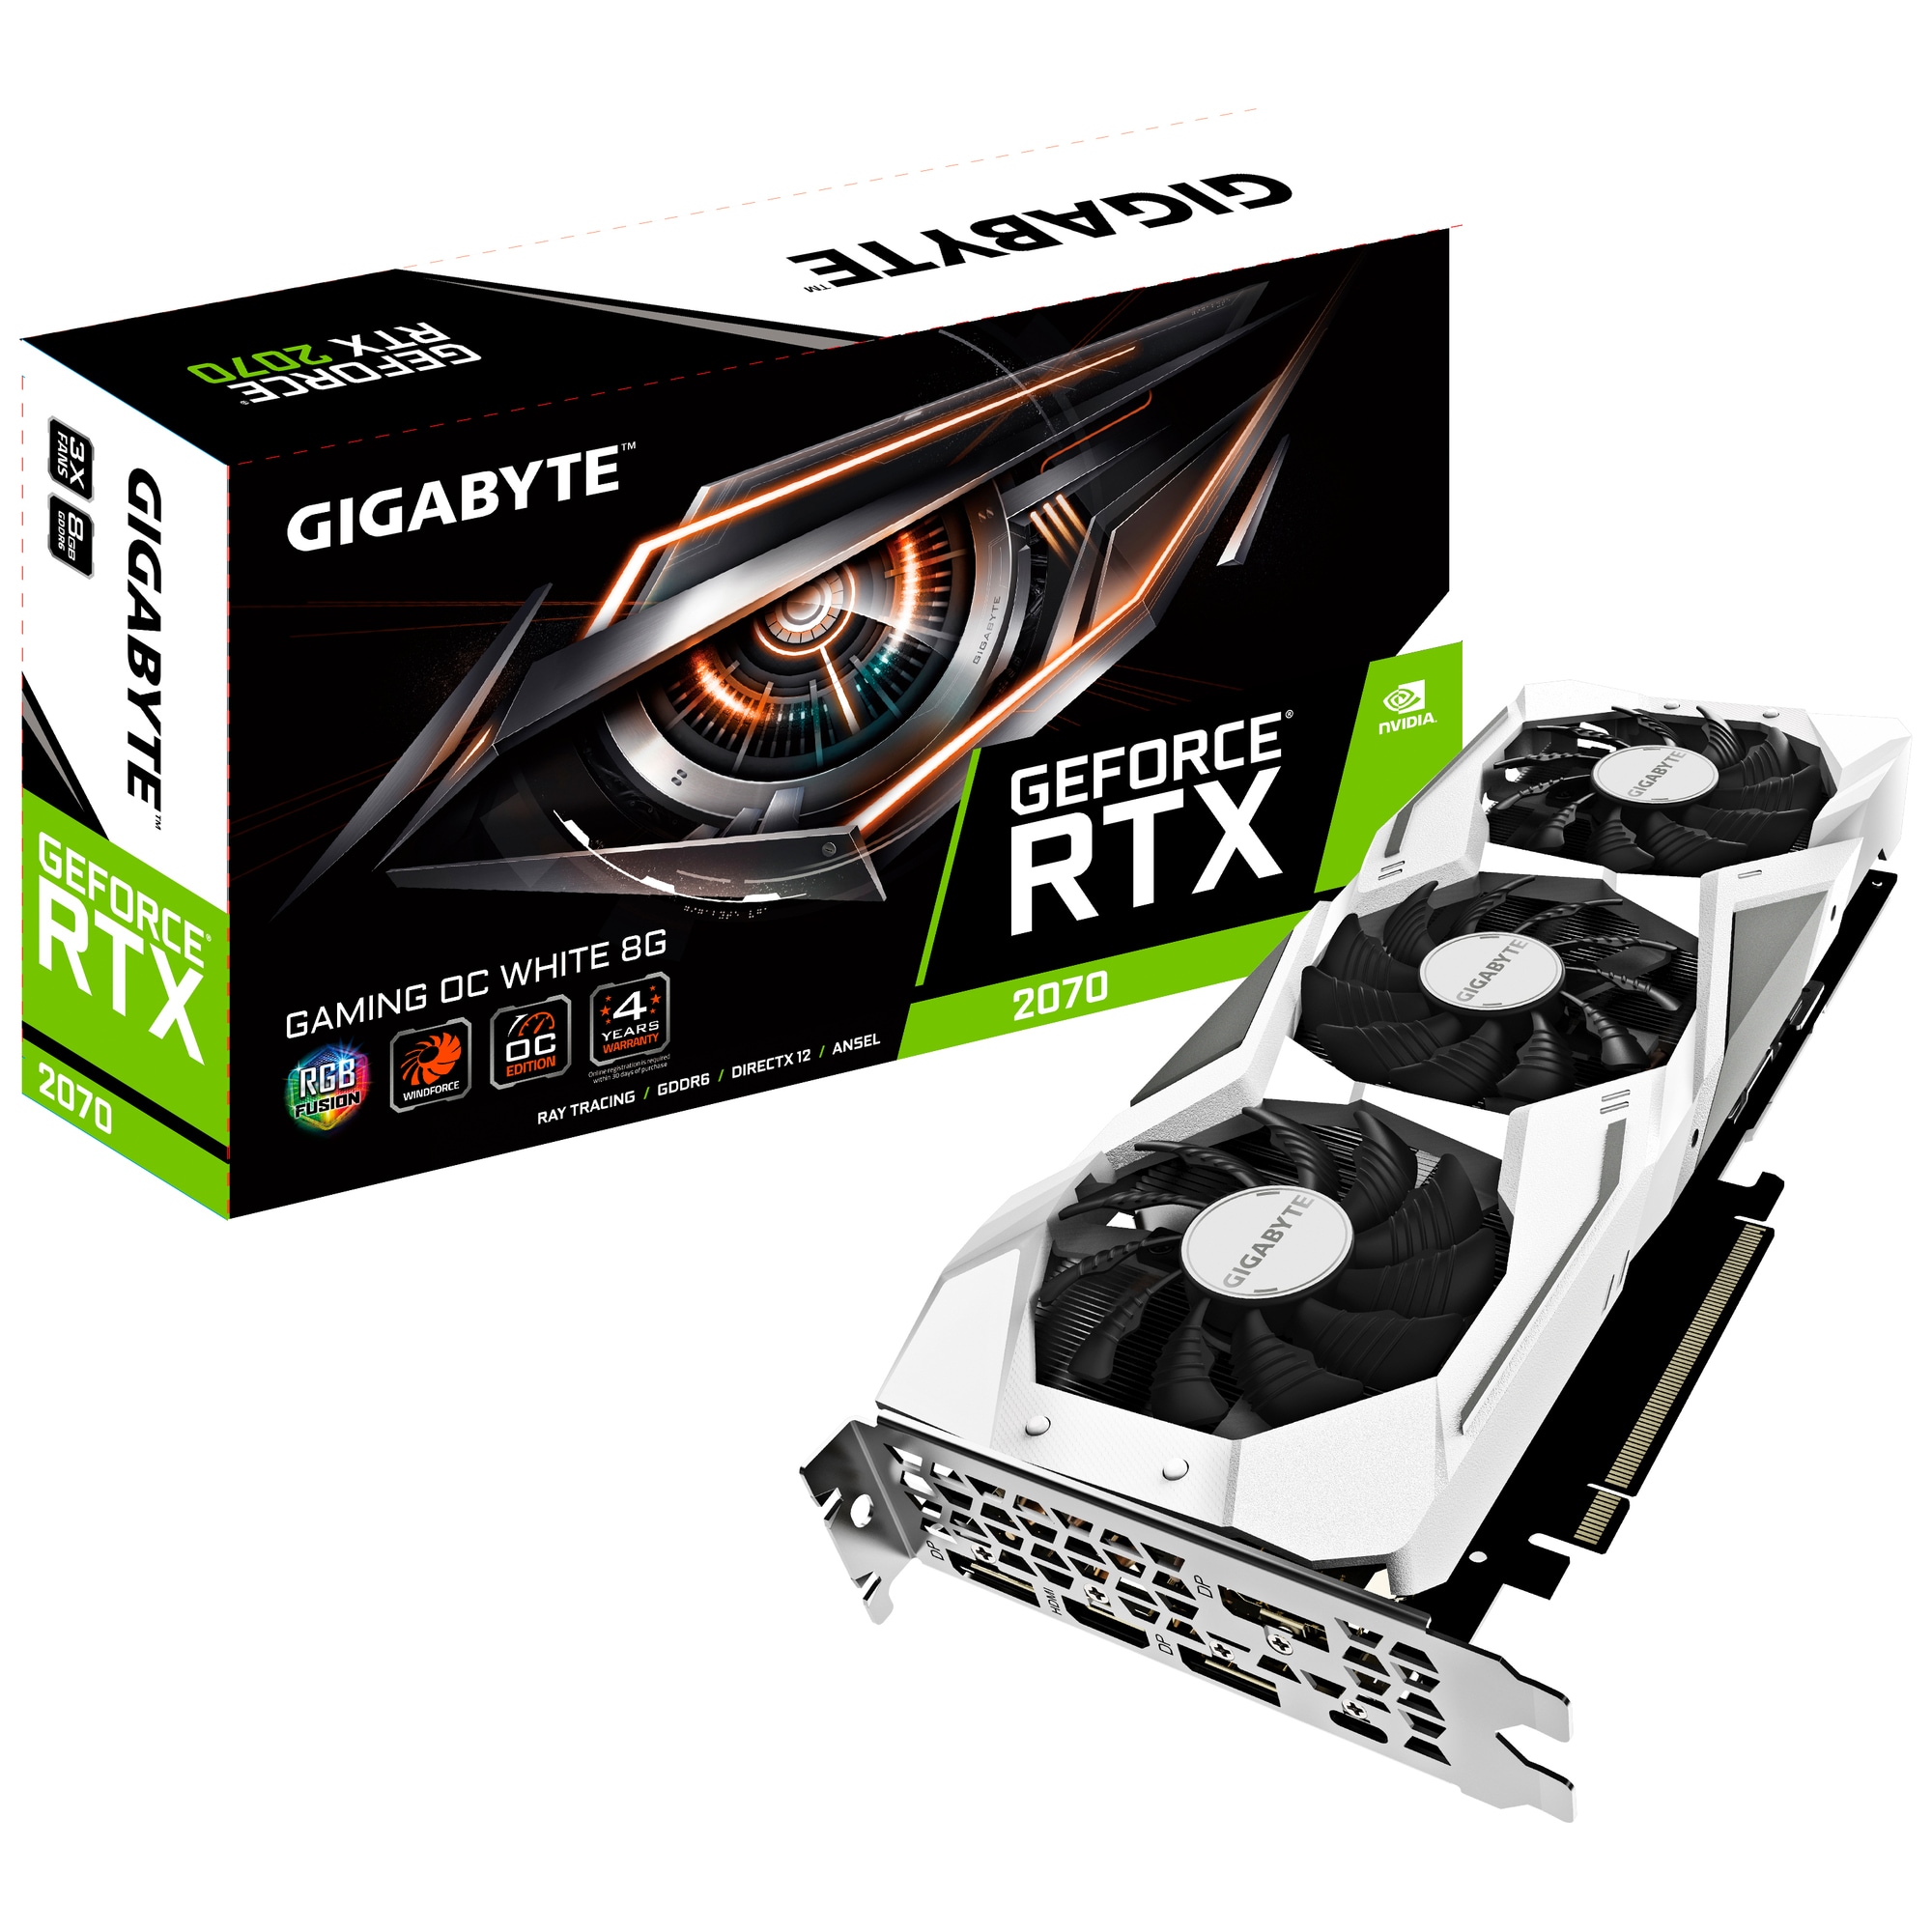 Gigabyte GeForce RTX 2070 Gaming OC grafikkort 8G (hvid) | Elgiganten